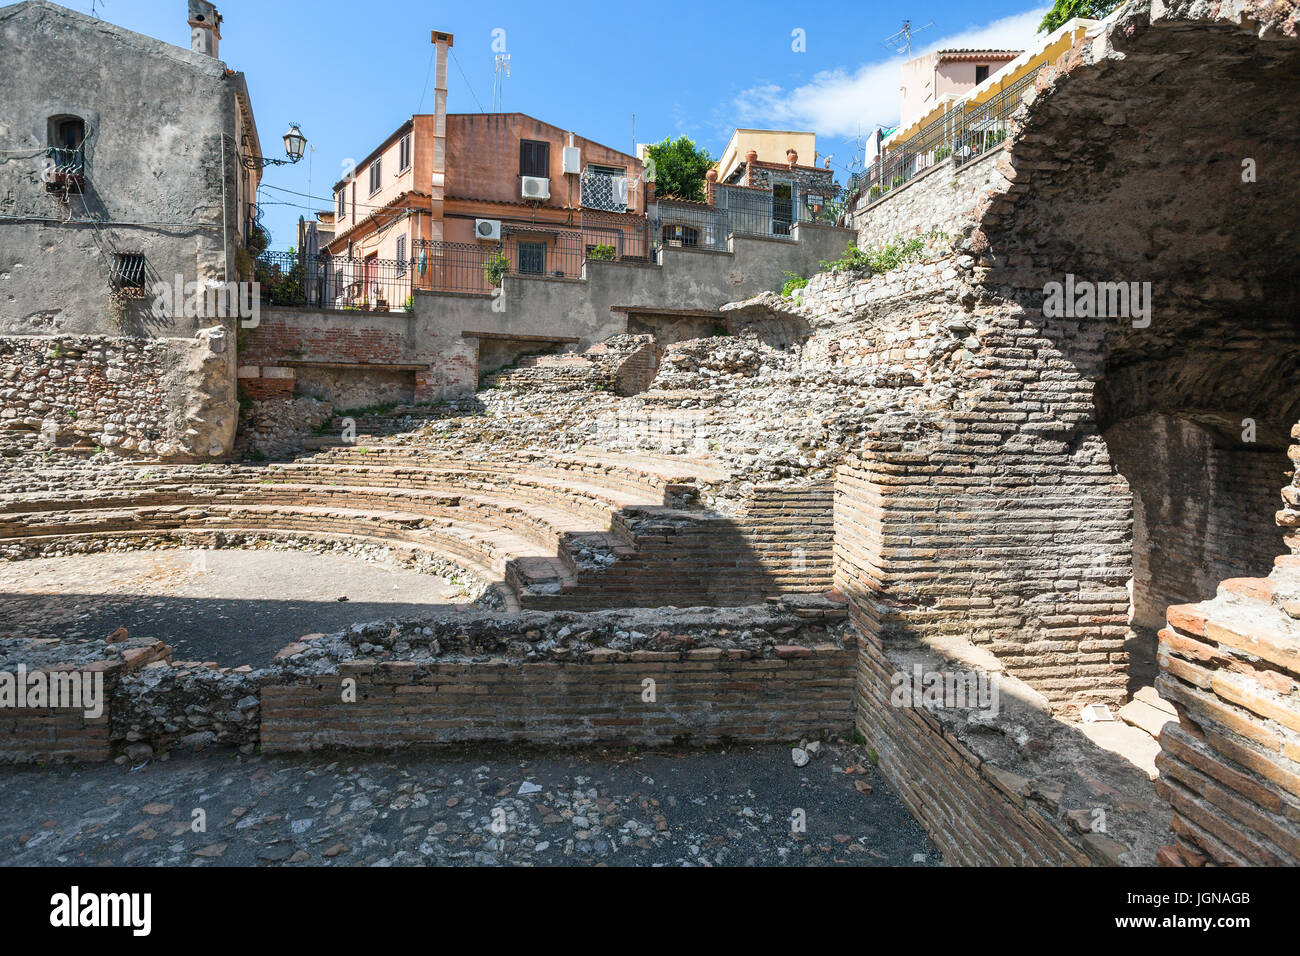 travel to Sicily, Italy - ruins of ancient roman amphitheatre Odeon in Taormina city. Stock Photo